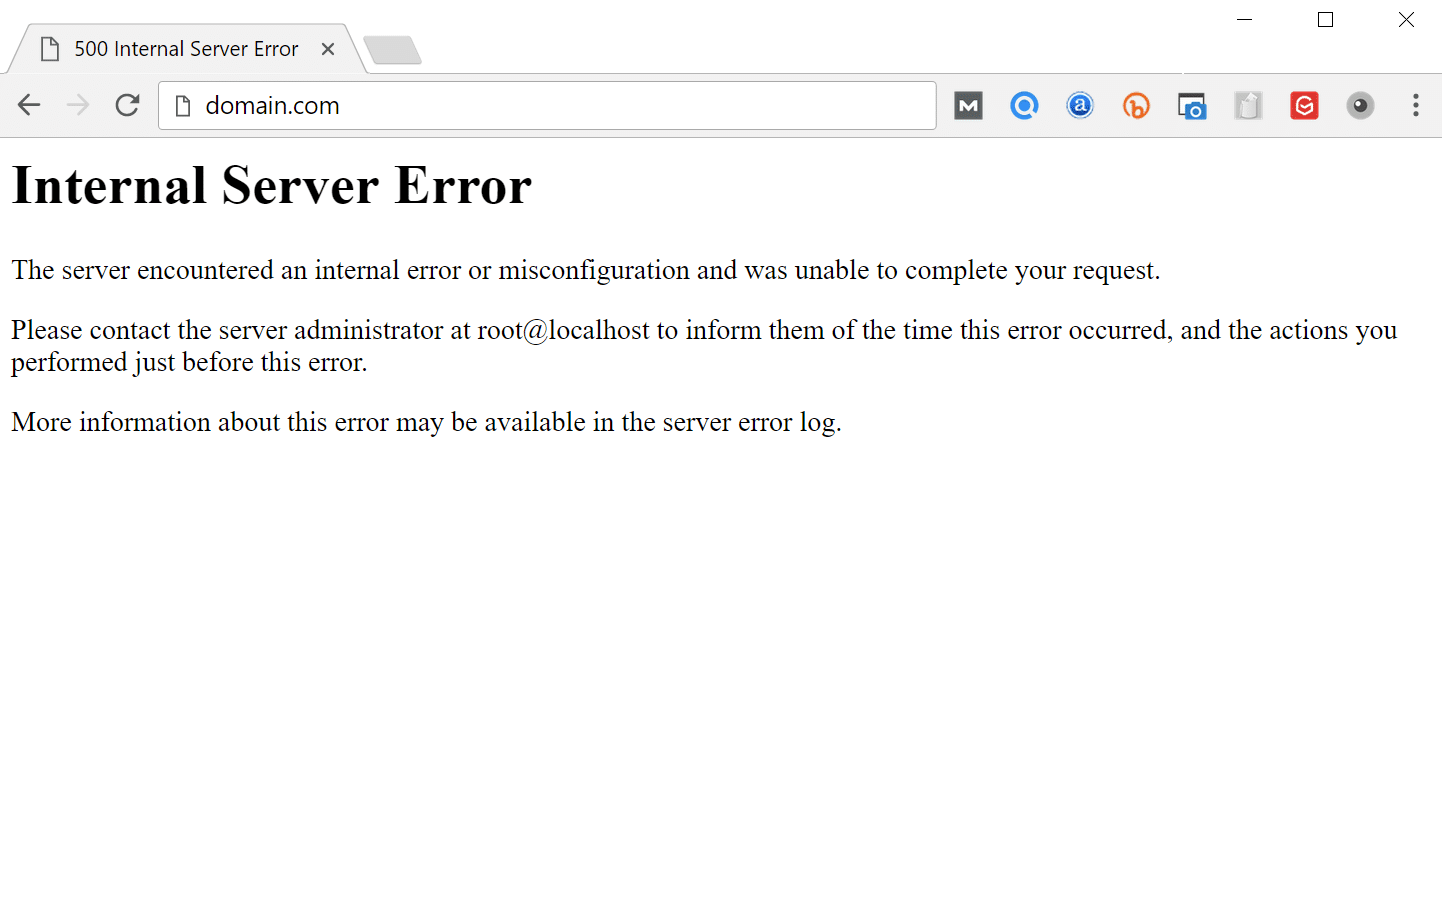 Tumbex internal server error